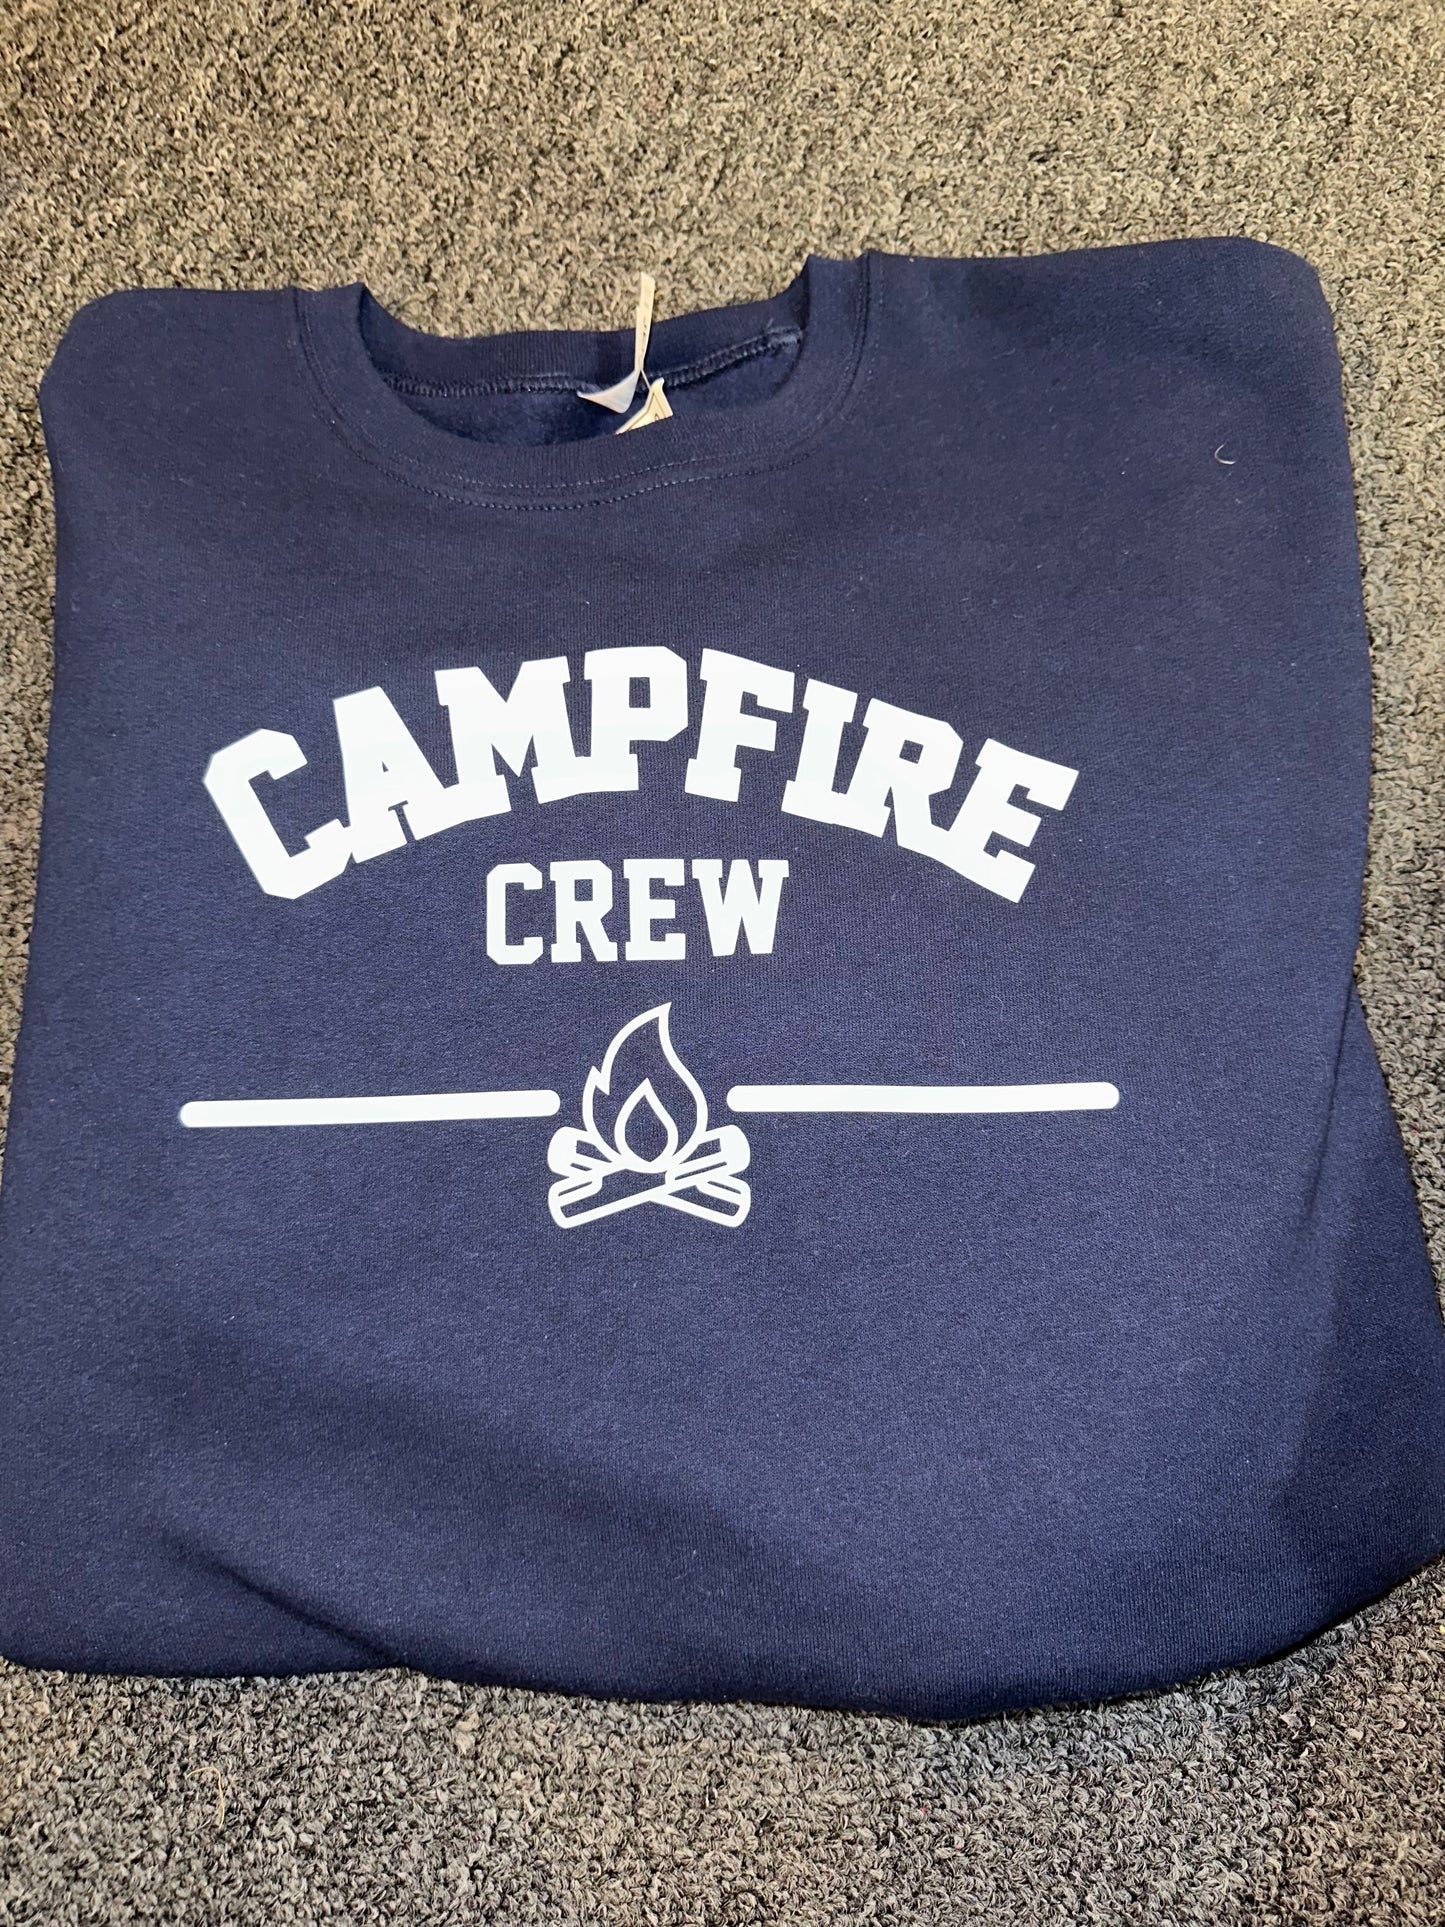 Campfire Crew